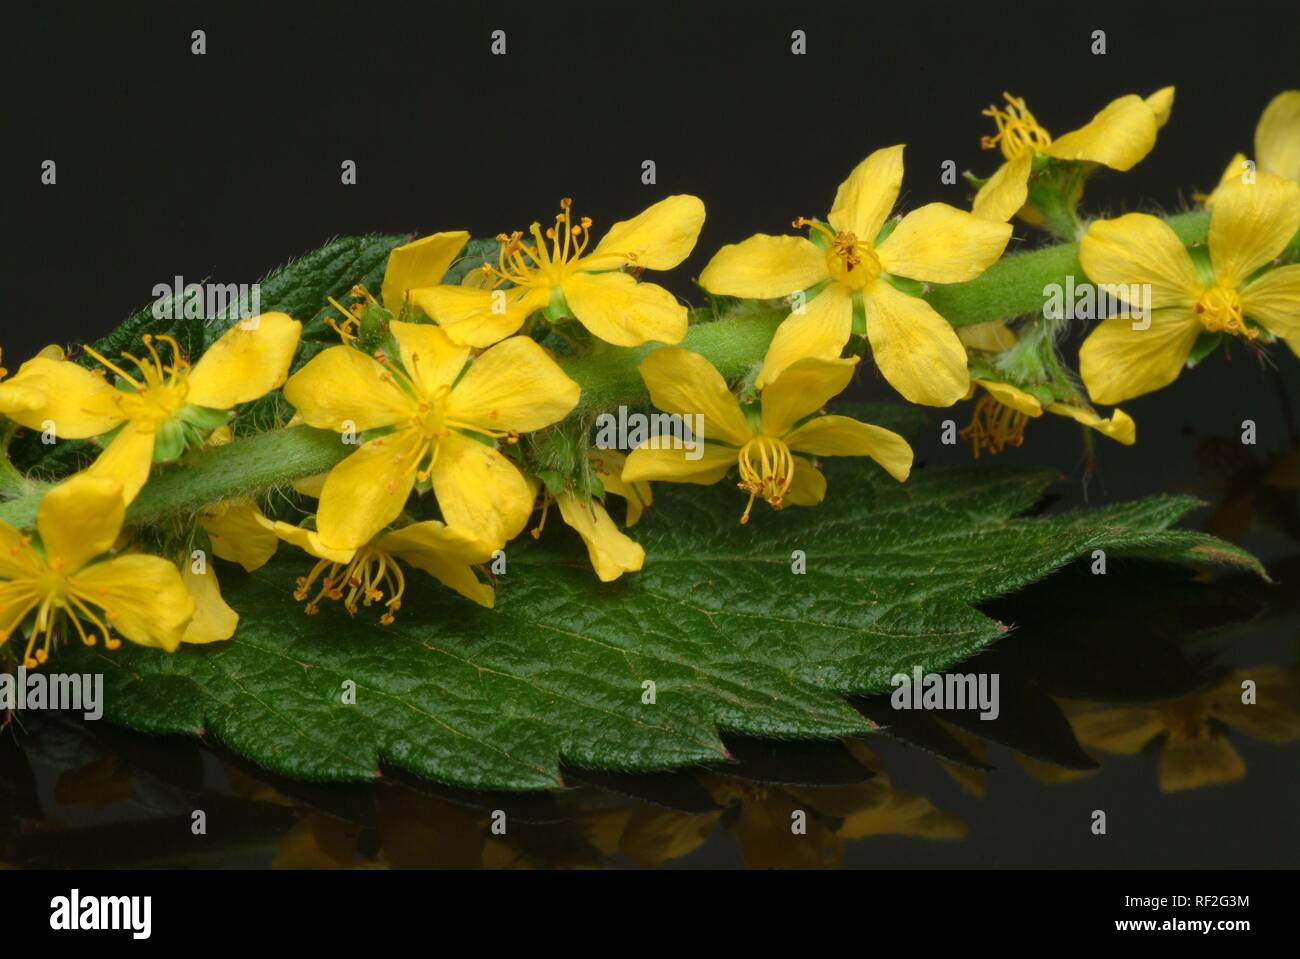 Gemeinsame Agrimony, Kirchtürme oder Sticklewort (Agrimonia eupatoria), heilkraut Stockfoto